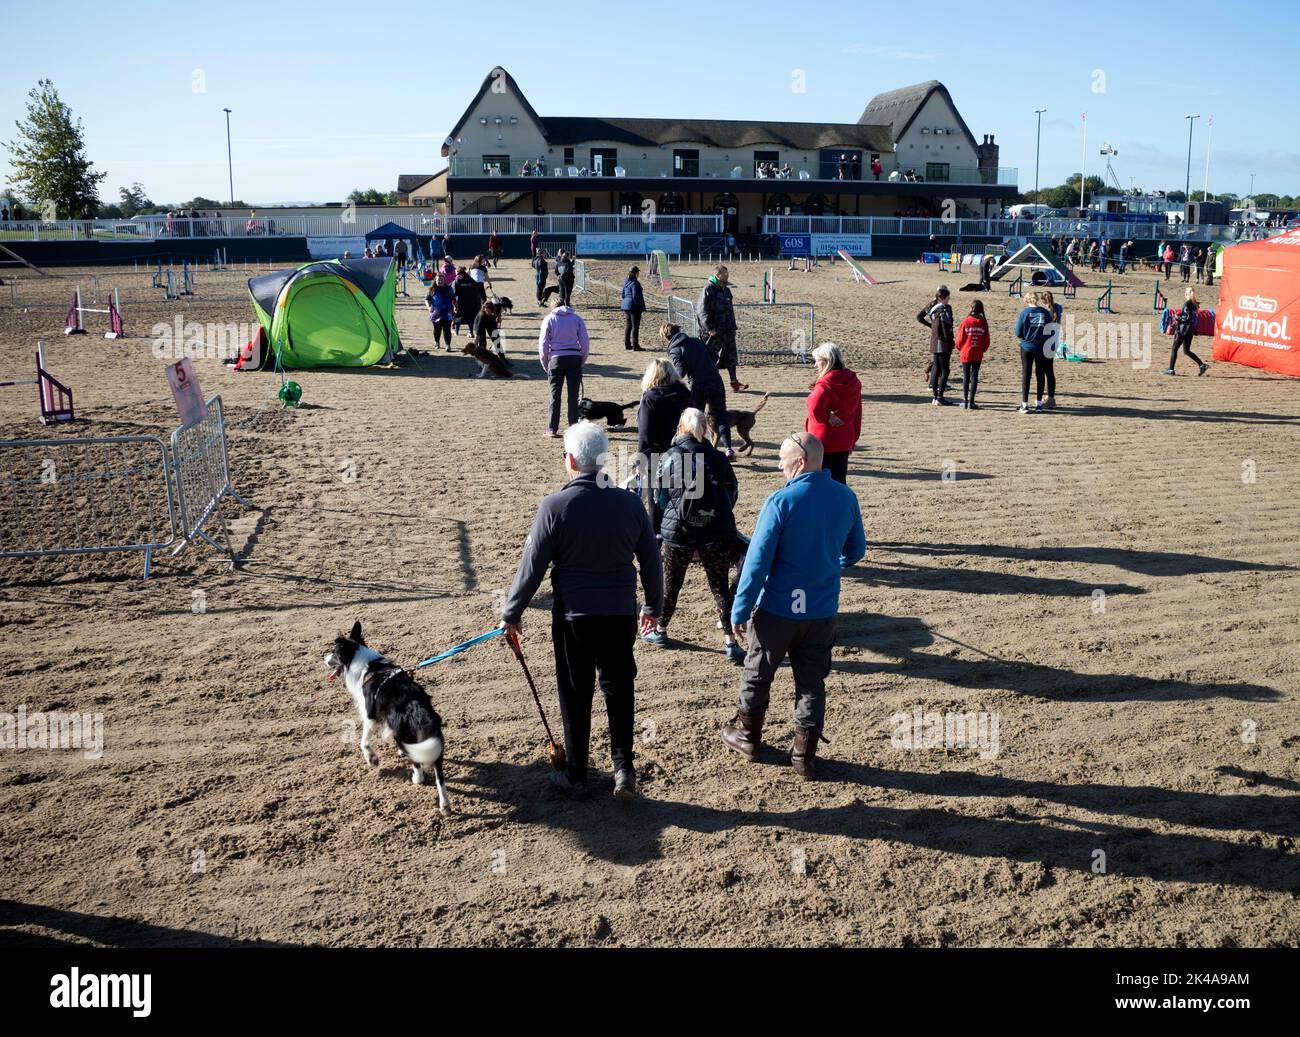 IconiX dog agility event at Dallas Burston Polo Club, Southam, Warwickshire, UK Stock Photo